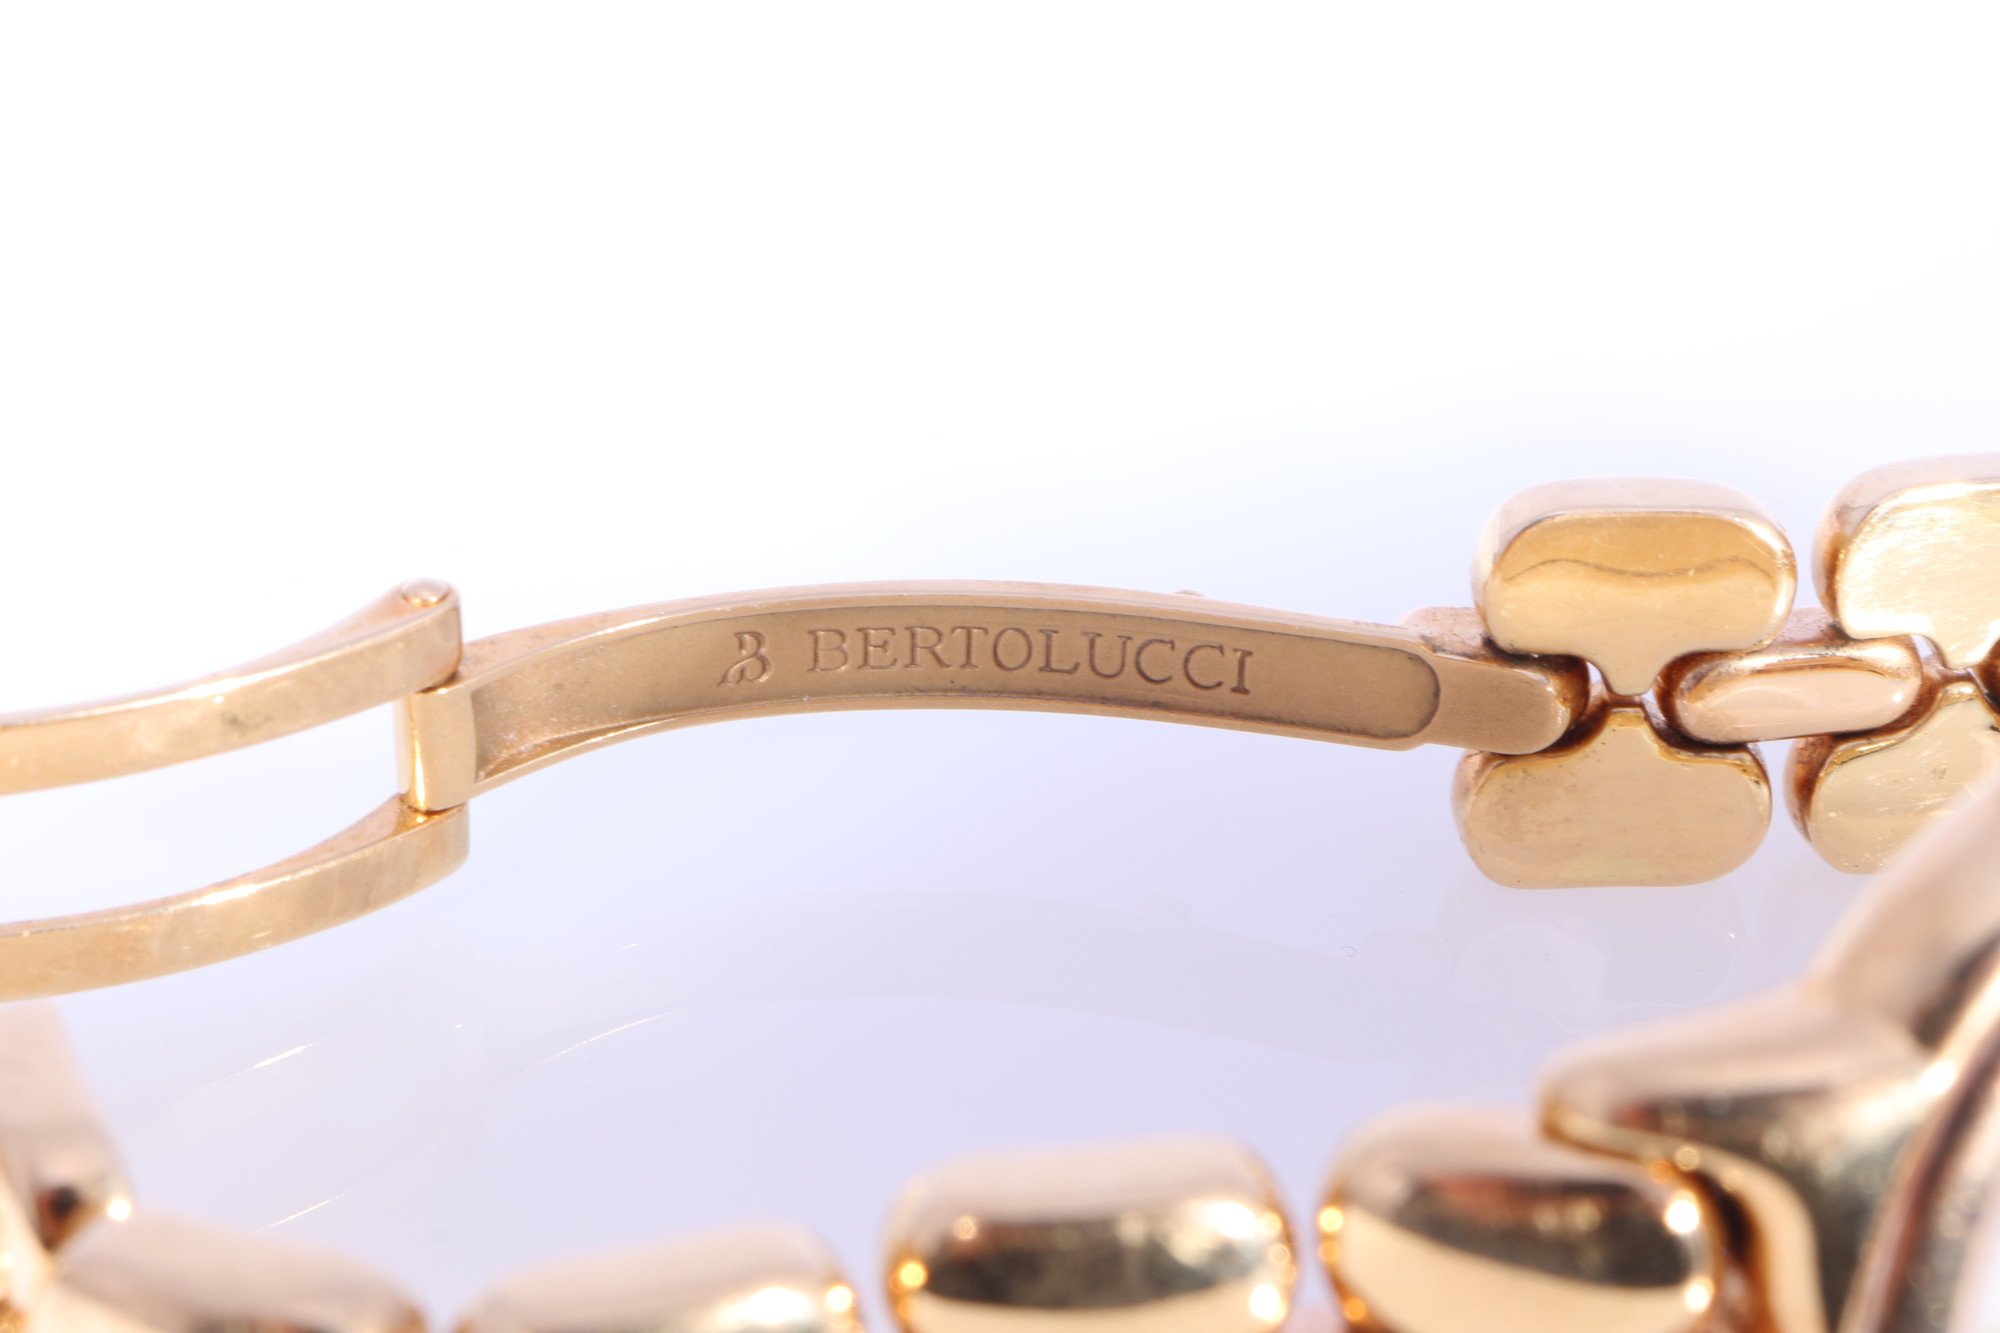 Bertolucci Pulchra 750 women's wrist watch with diamonds, 18K Gold Damen Armbanduhr mit Diamanten, - Image 9 of 9